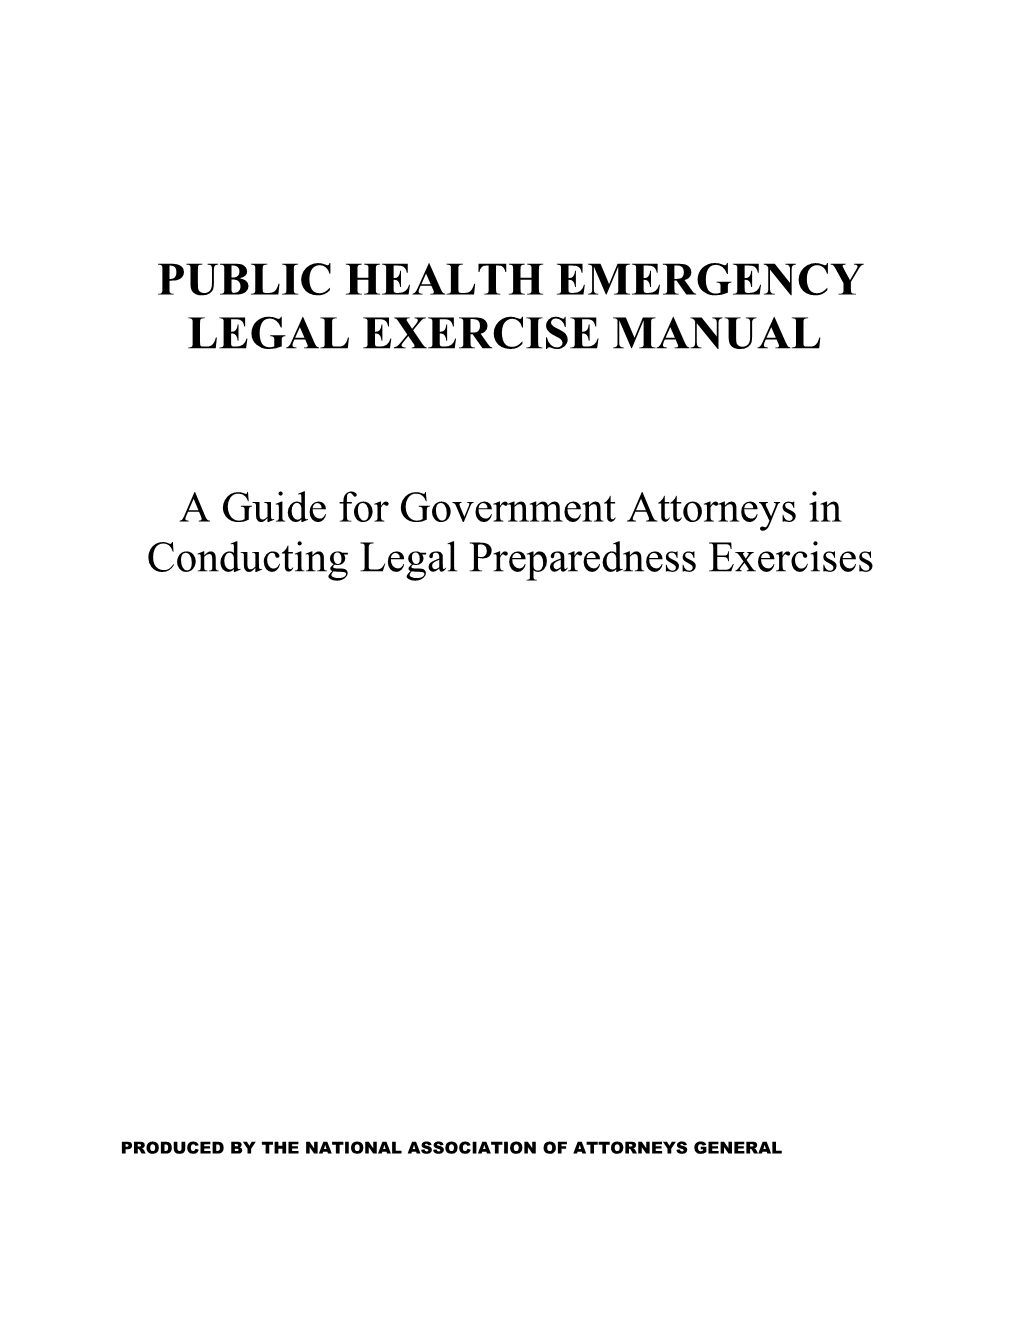 Public Health Emergency Legal Exercise Manual